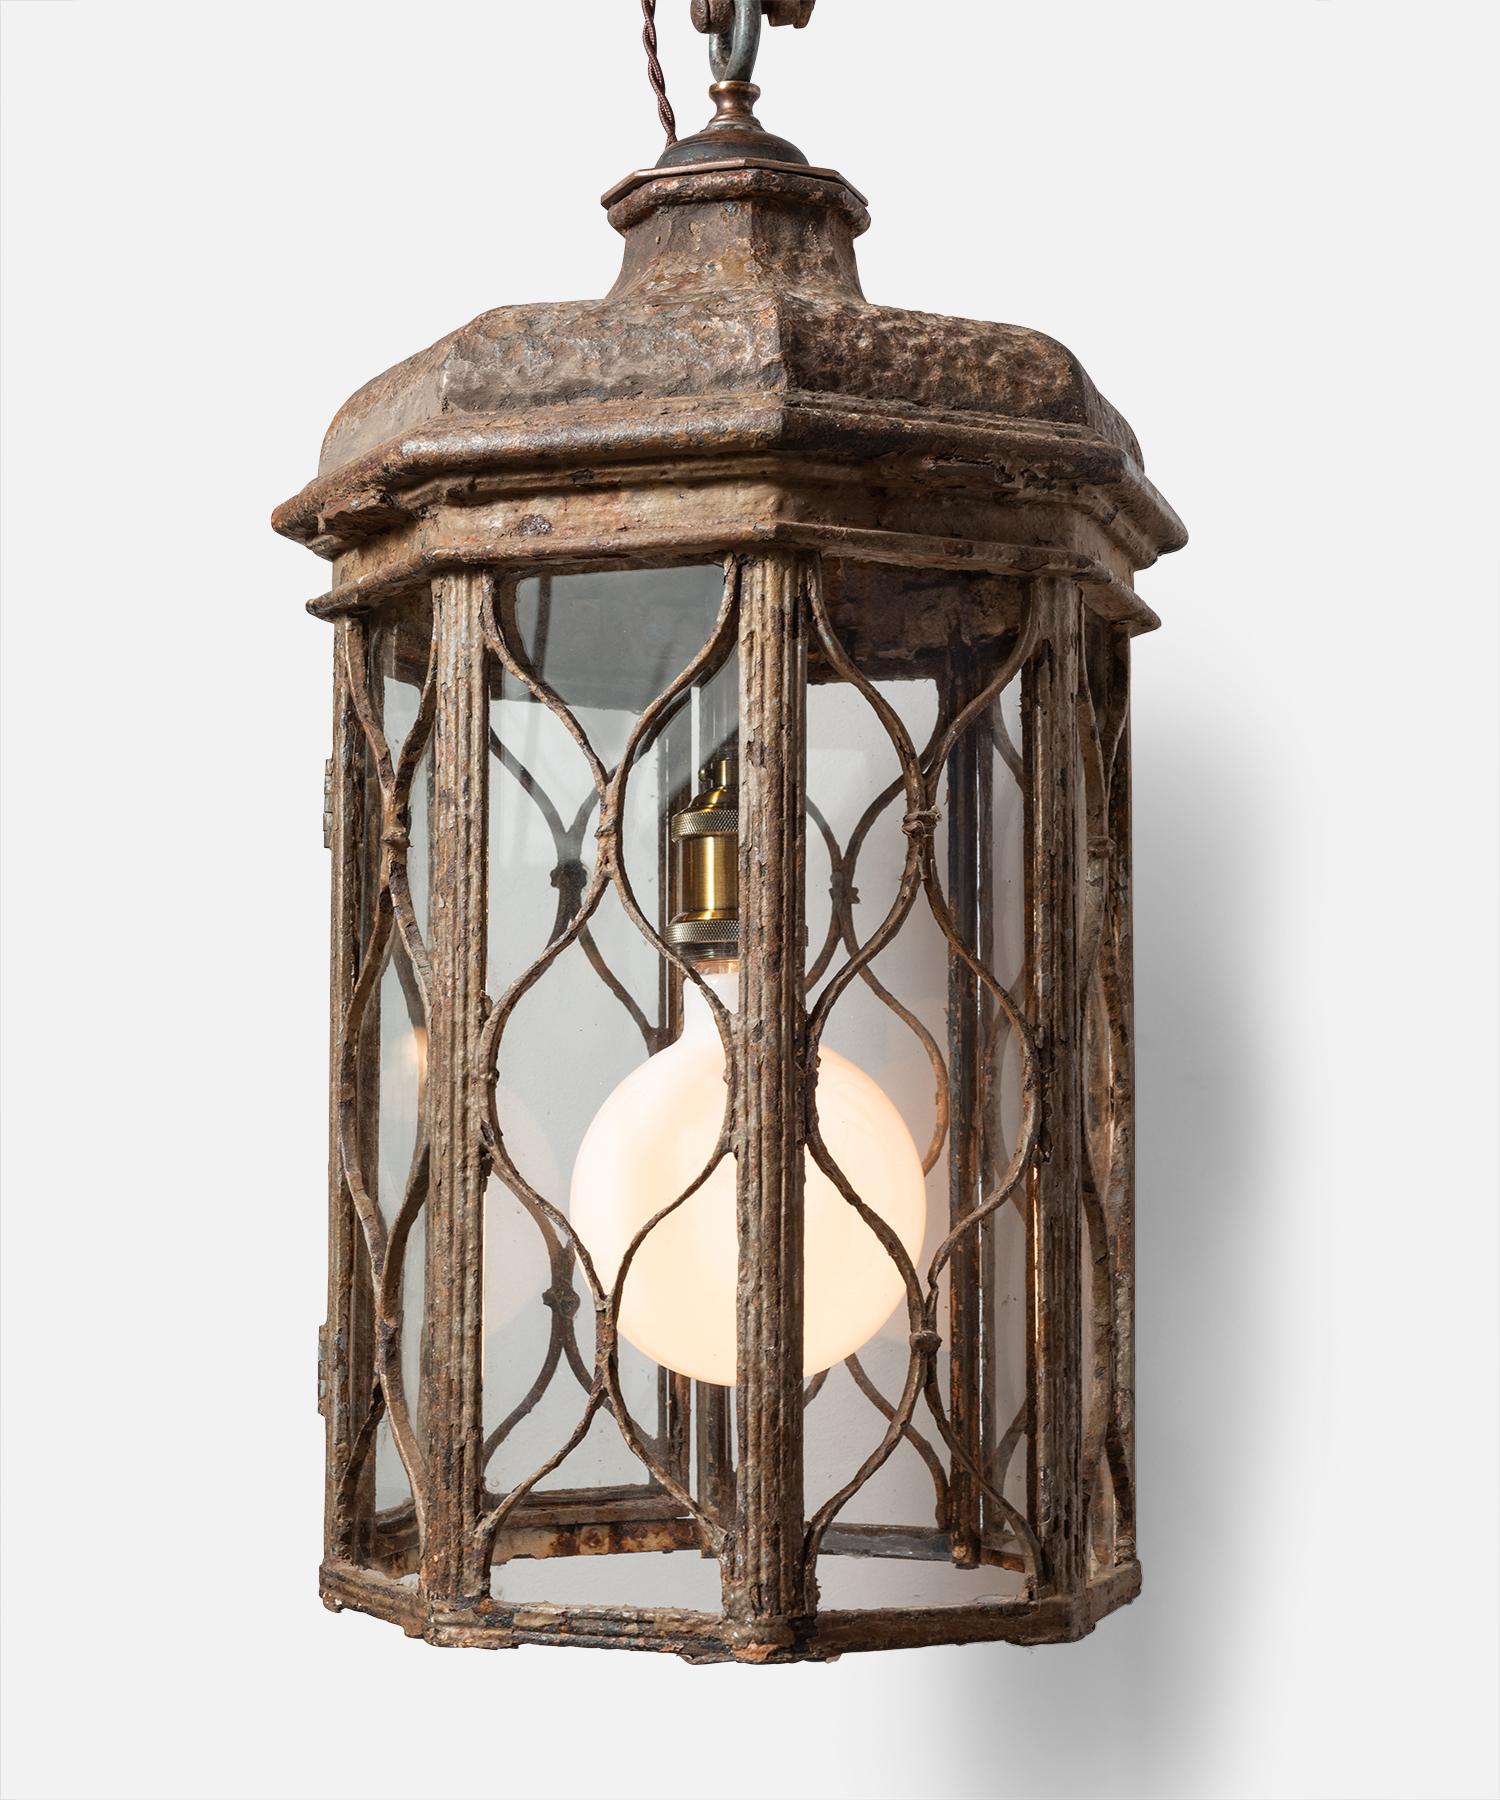 Regency iron lantern, England, circa 1815.

Octagonal form with iron work panels and clear glazing.